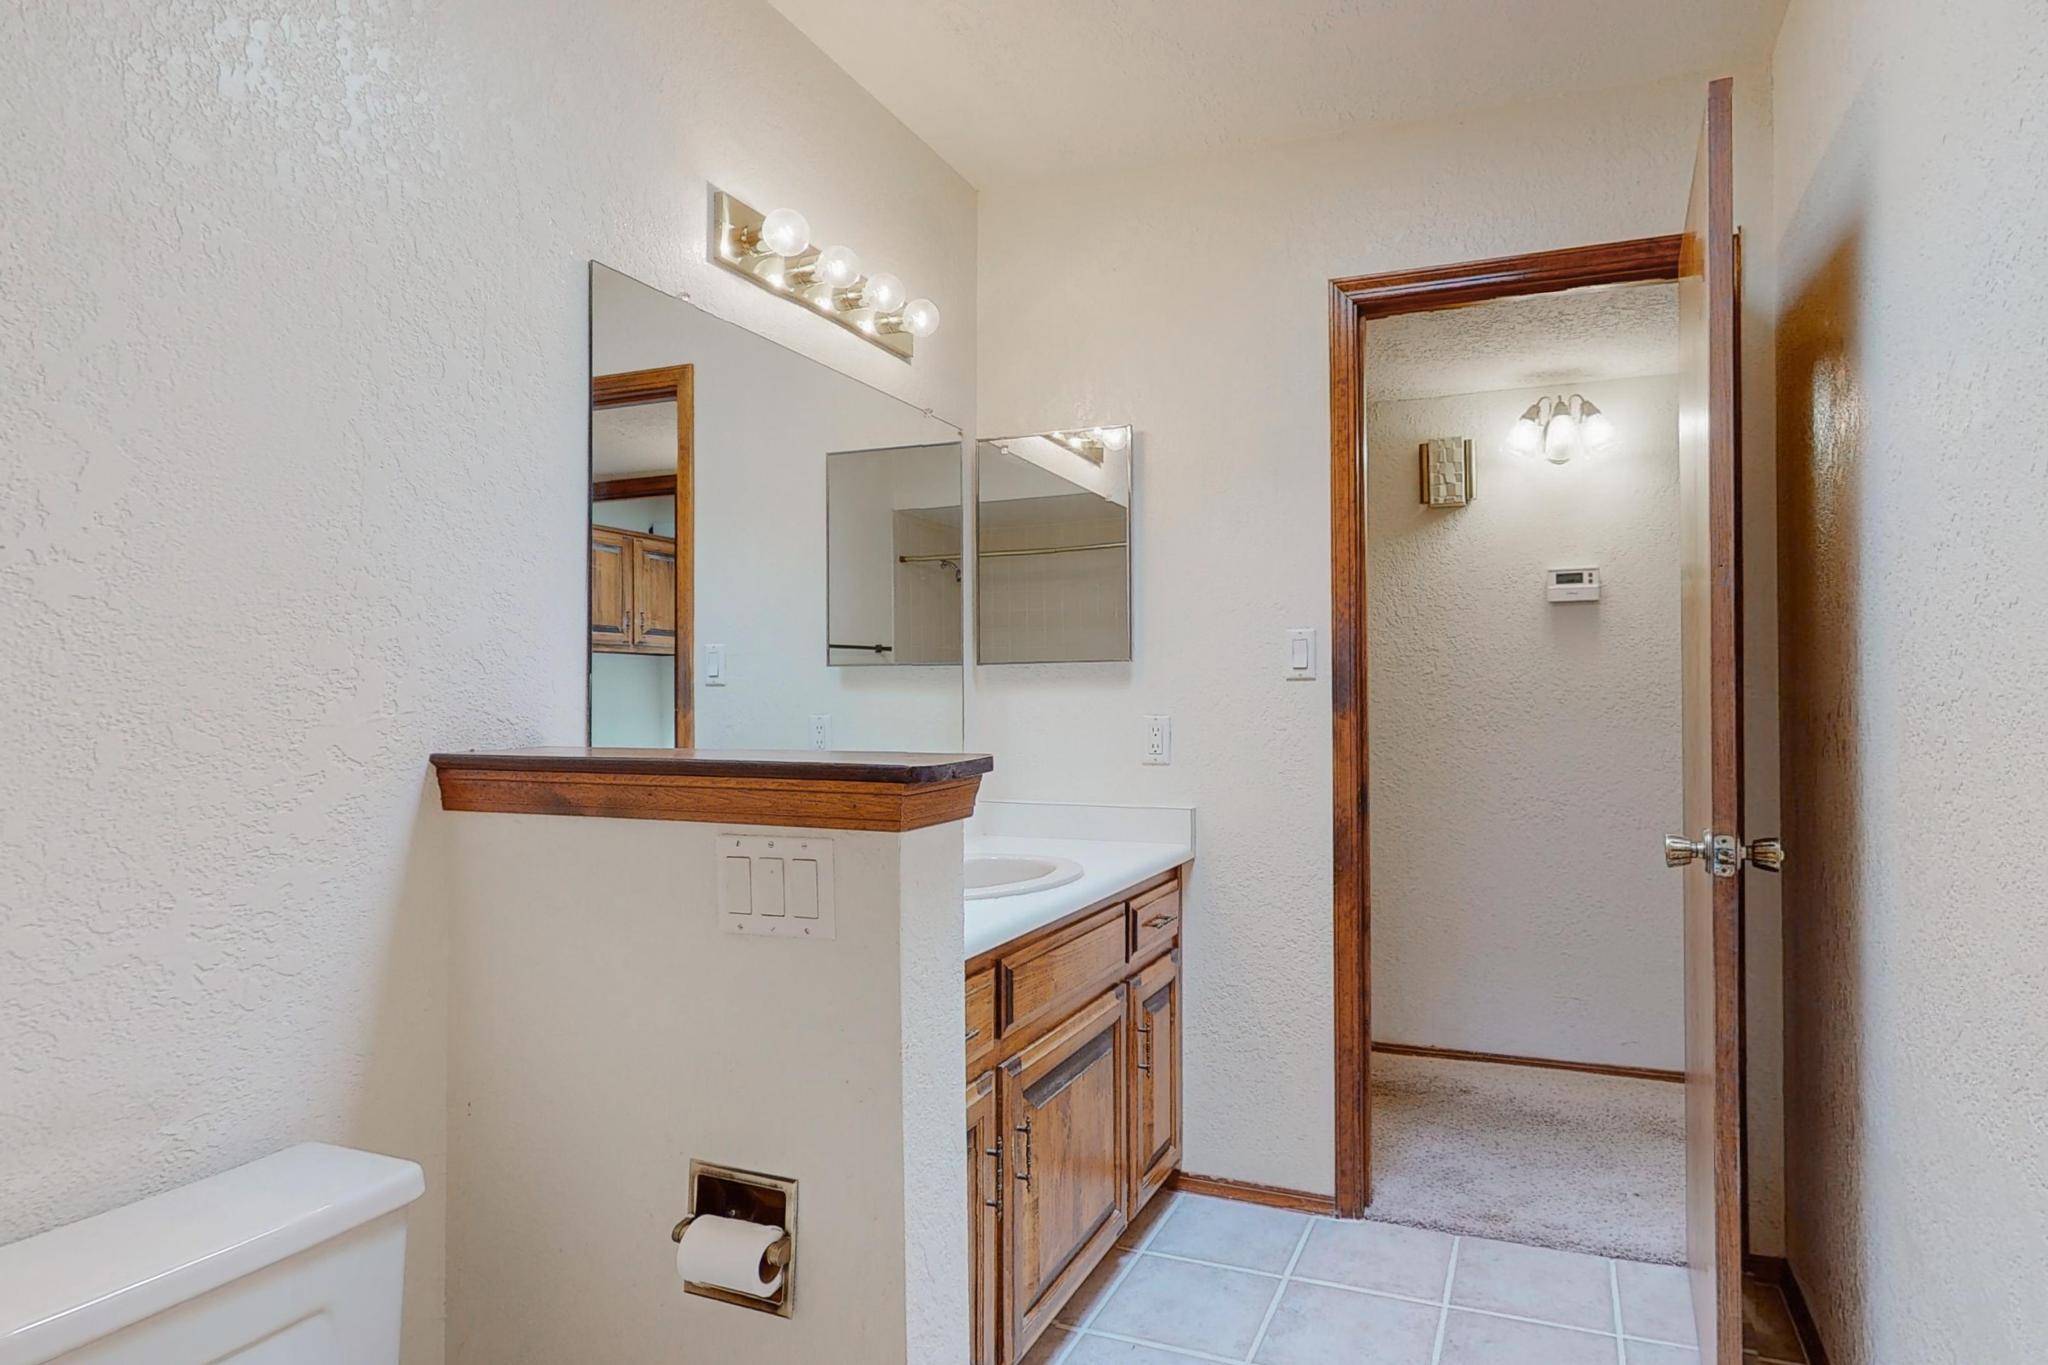 61 Westlake Drive NE, Albuquerque, New Mexico 87112, 2 Bedrooms Bedrooms, ,2 BathroomsBathrooms,Residential,For Sale,61 Westlake Drive NE,1060769